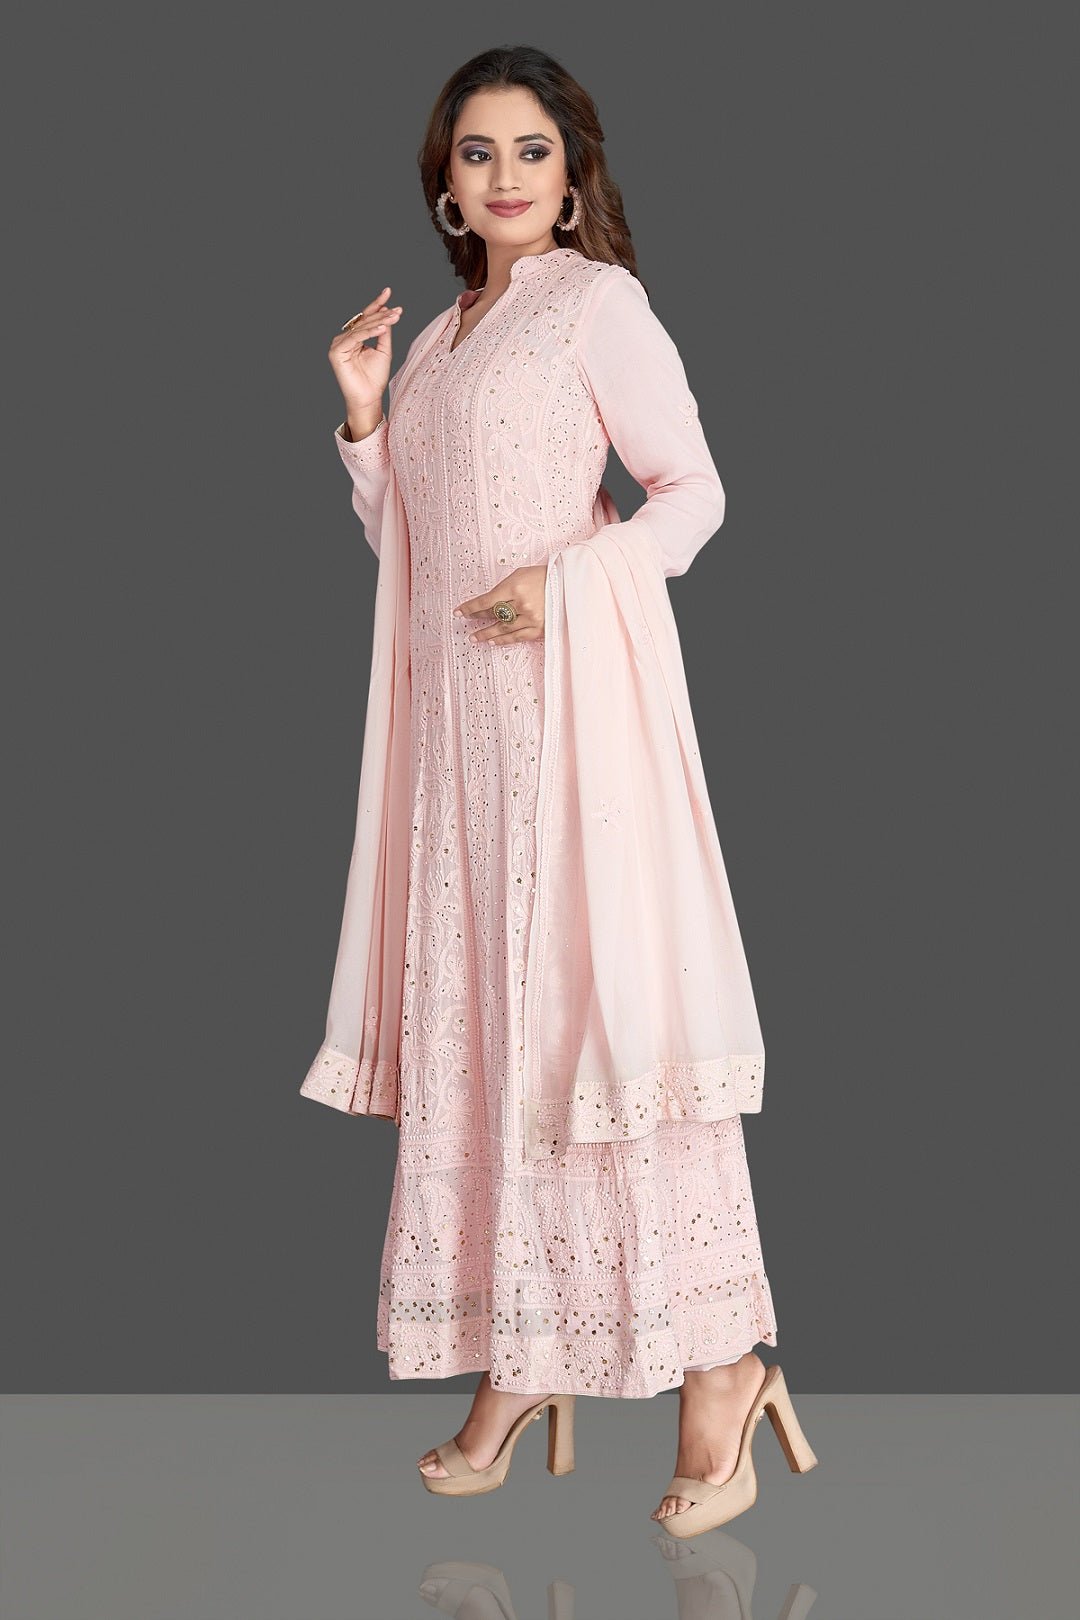 502645 Powder Pink Lucknowi Work Georgette Anarkali Suit